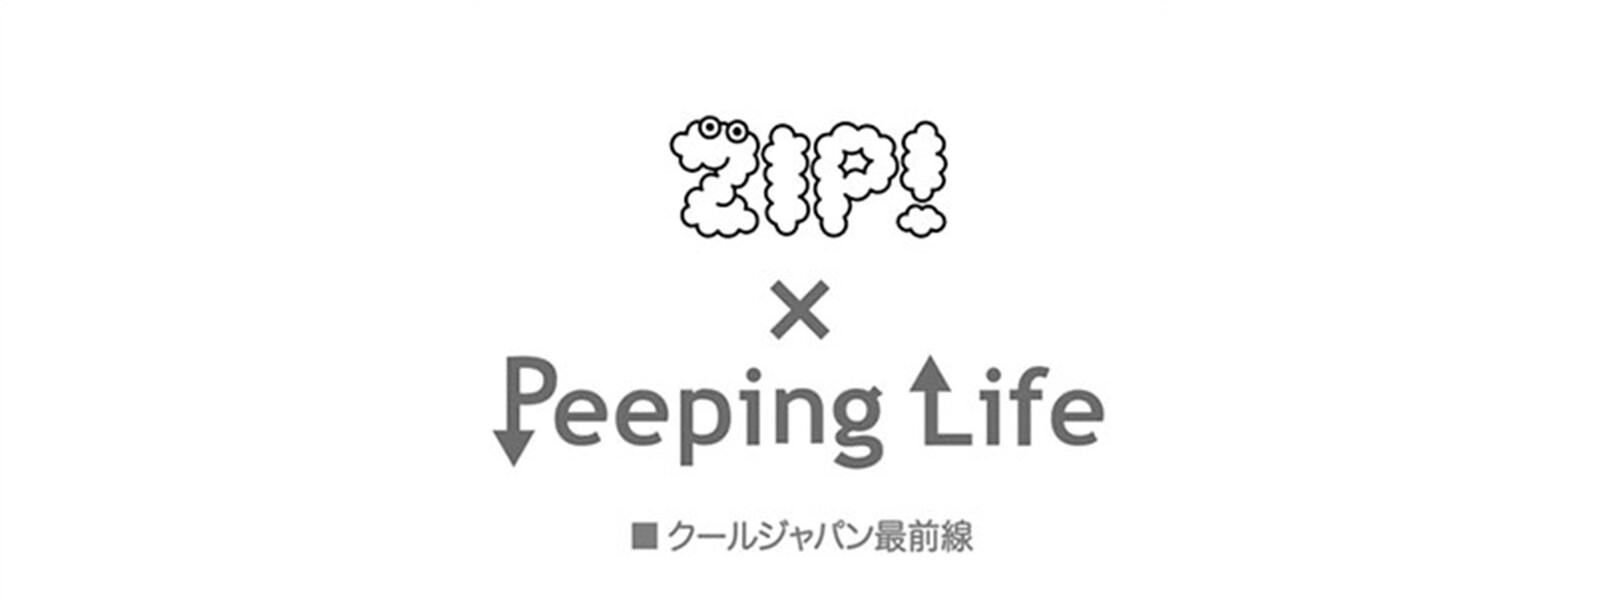 ZIP!×Peeping Life TV クールジャパン最前線の動画 - ZIP! おはよう忍者隊ガッチャマン